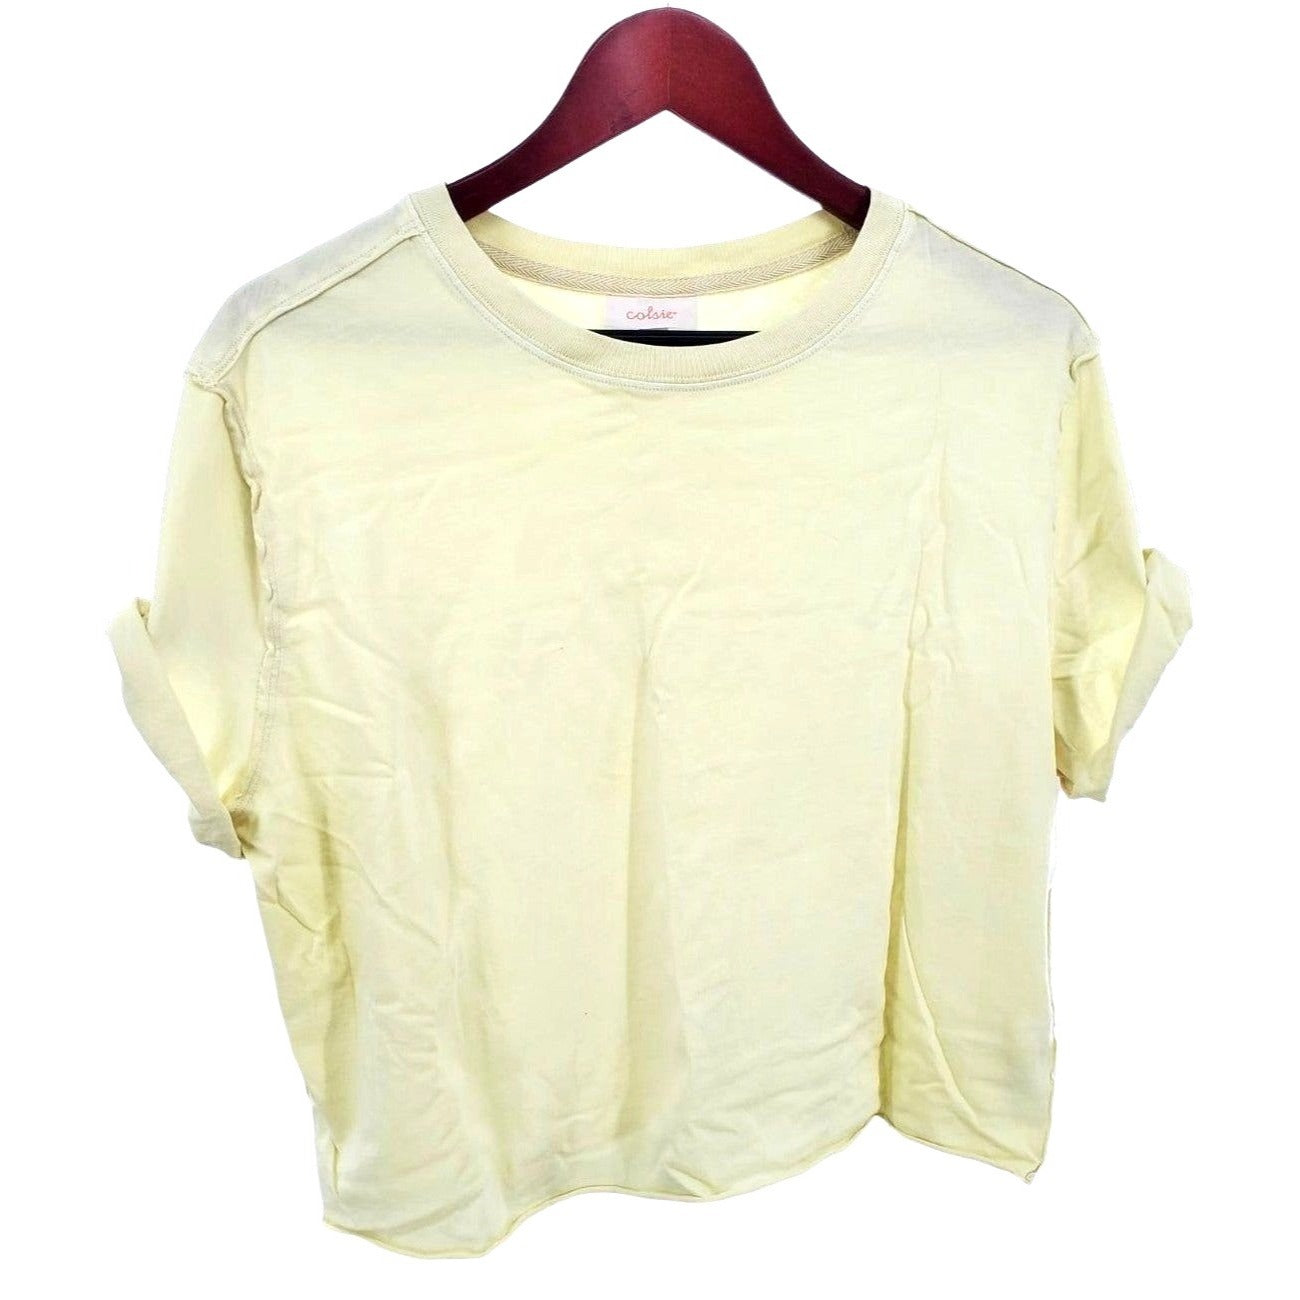 COLSIE Shirt Bright neon Yellow Crop top Lightweight Tee Raw Hem